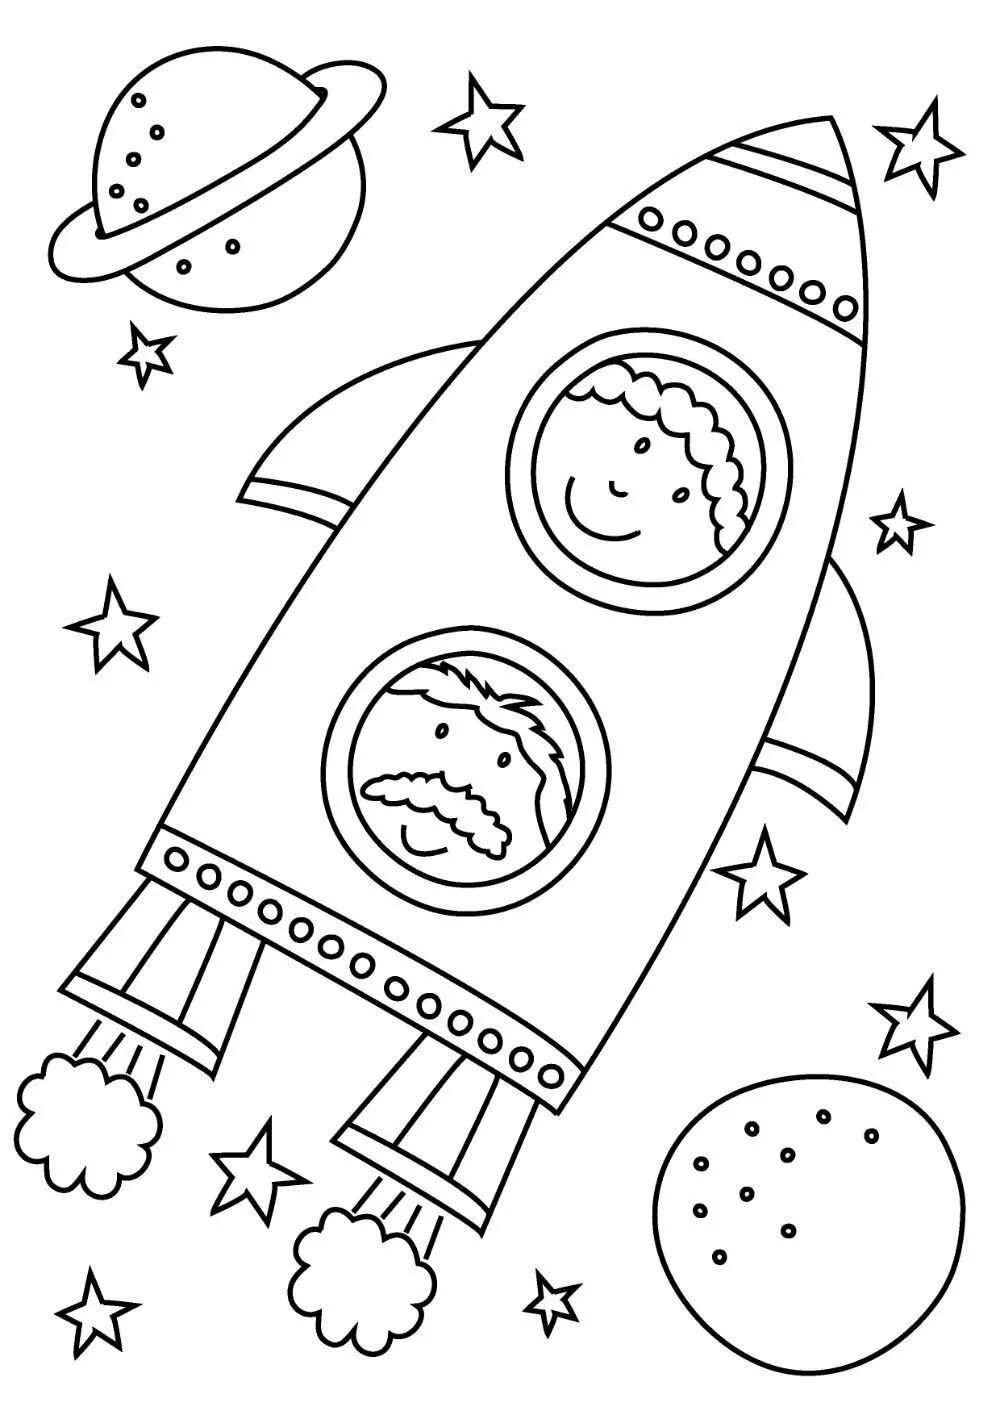 Рисунок на тему космос раскраска. Ракета раскраска. Космос раскраска для детей. Раскраска. В космосе. Ракета закраска.